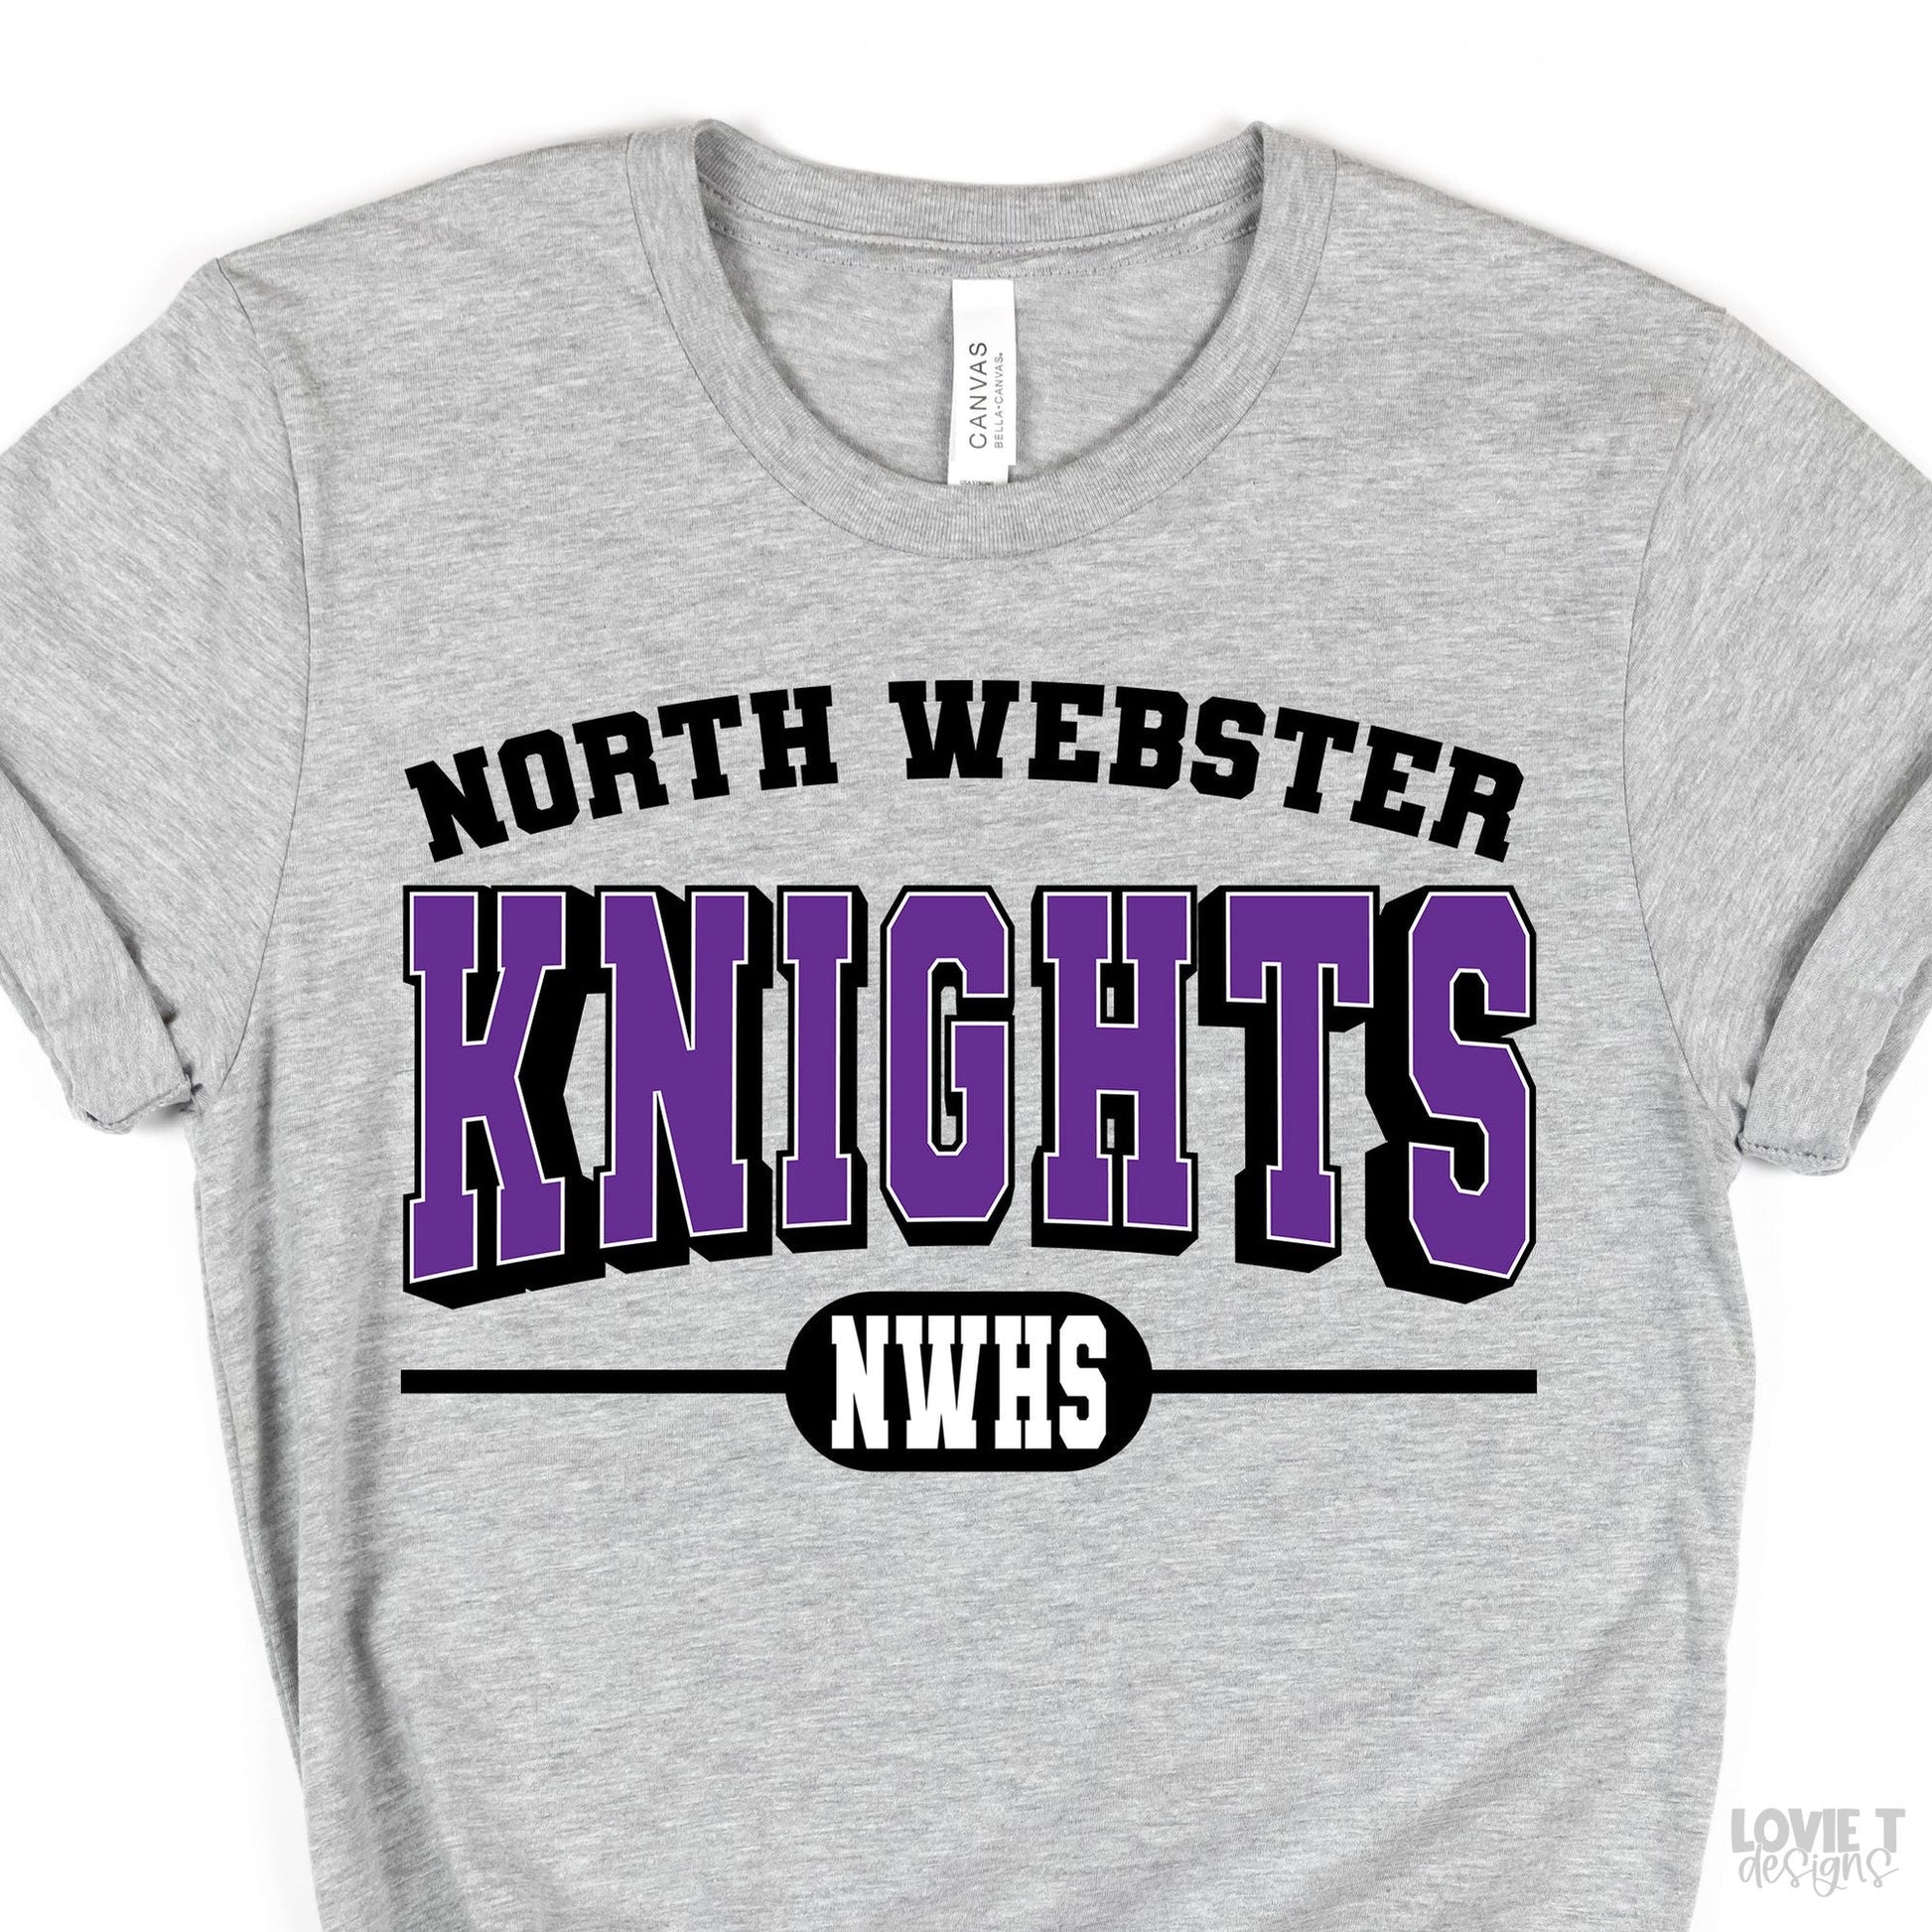 North Webster Knights